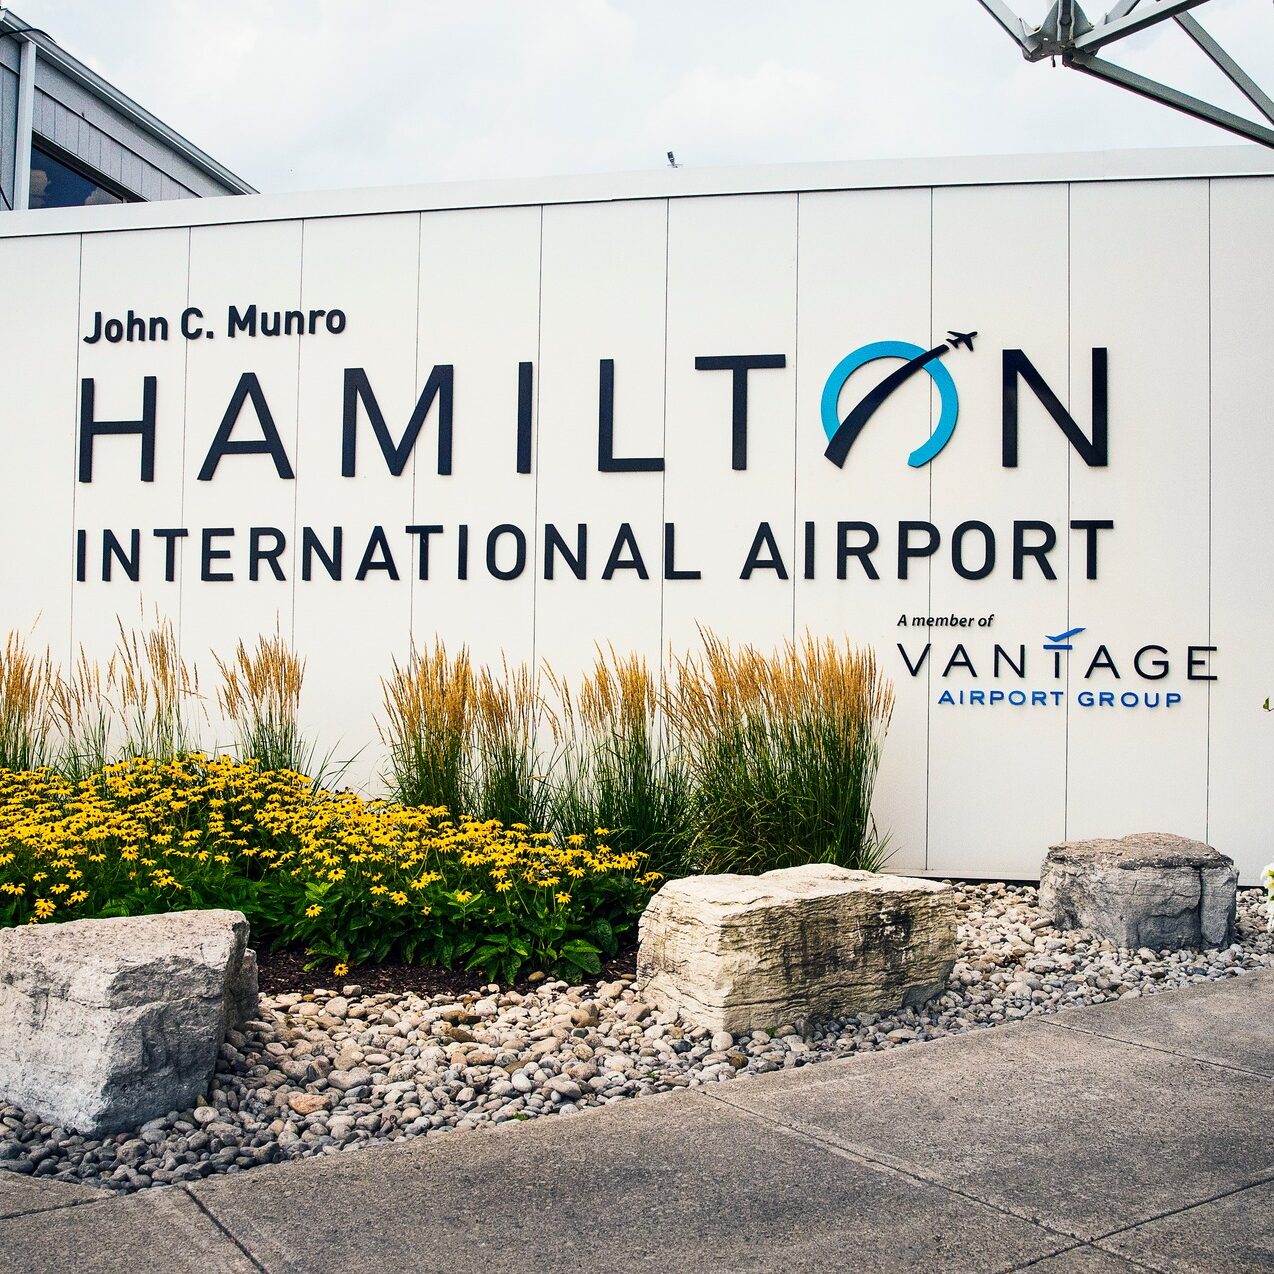 JOHN C. MUNRO HAMILTON INTERNATIONAL AIRPORT